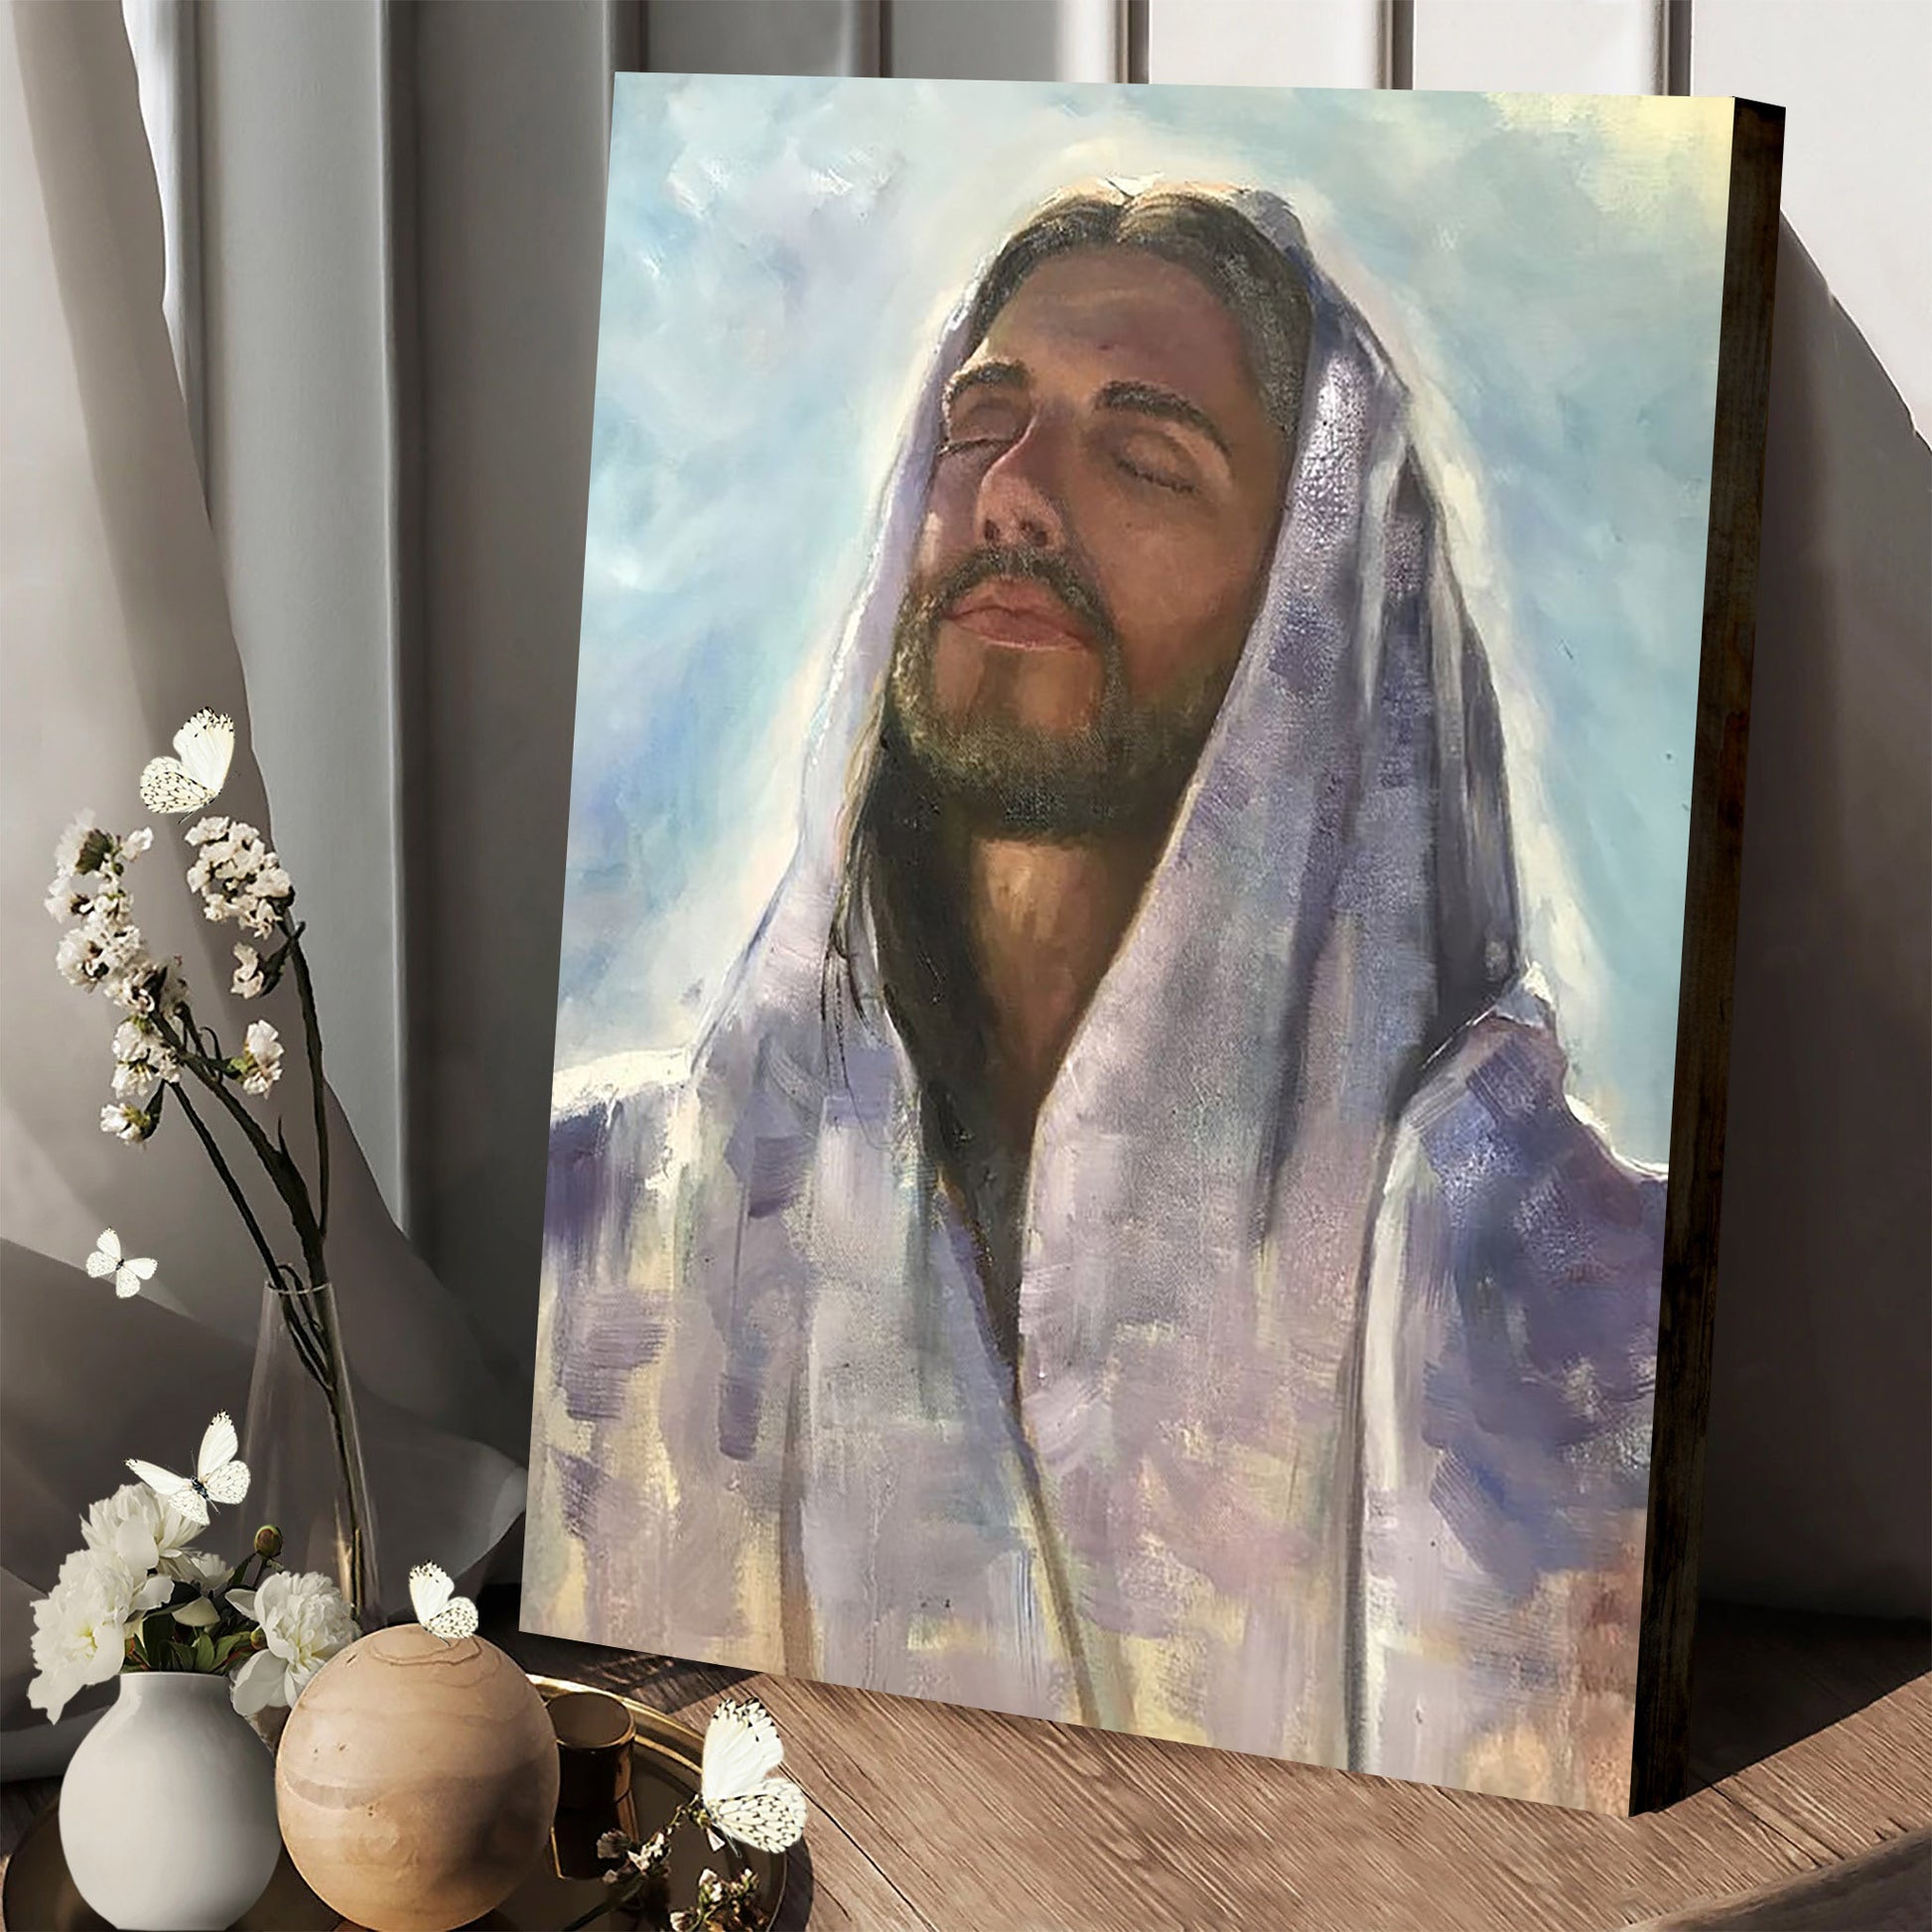 Images Of Jesus Christ Canvas Prints - Jesus Christ Art - Christian Canvas Wall Decor